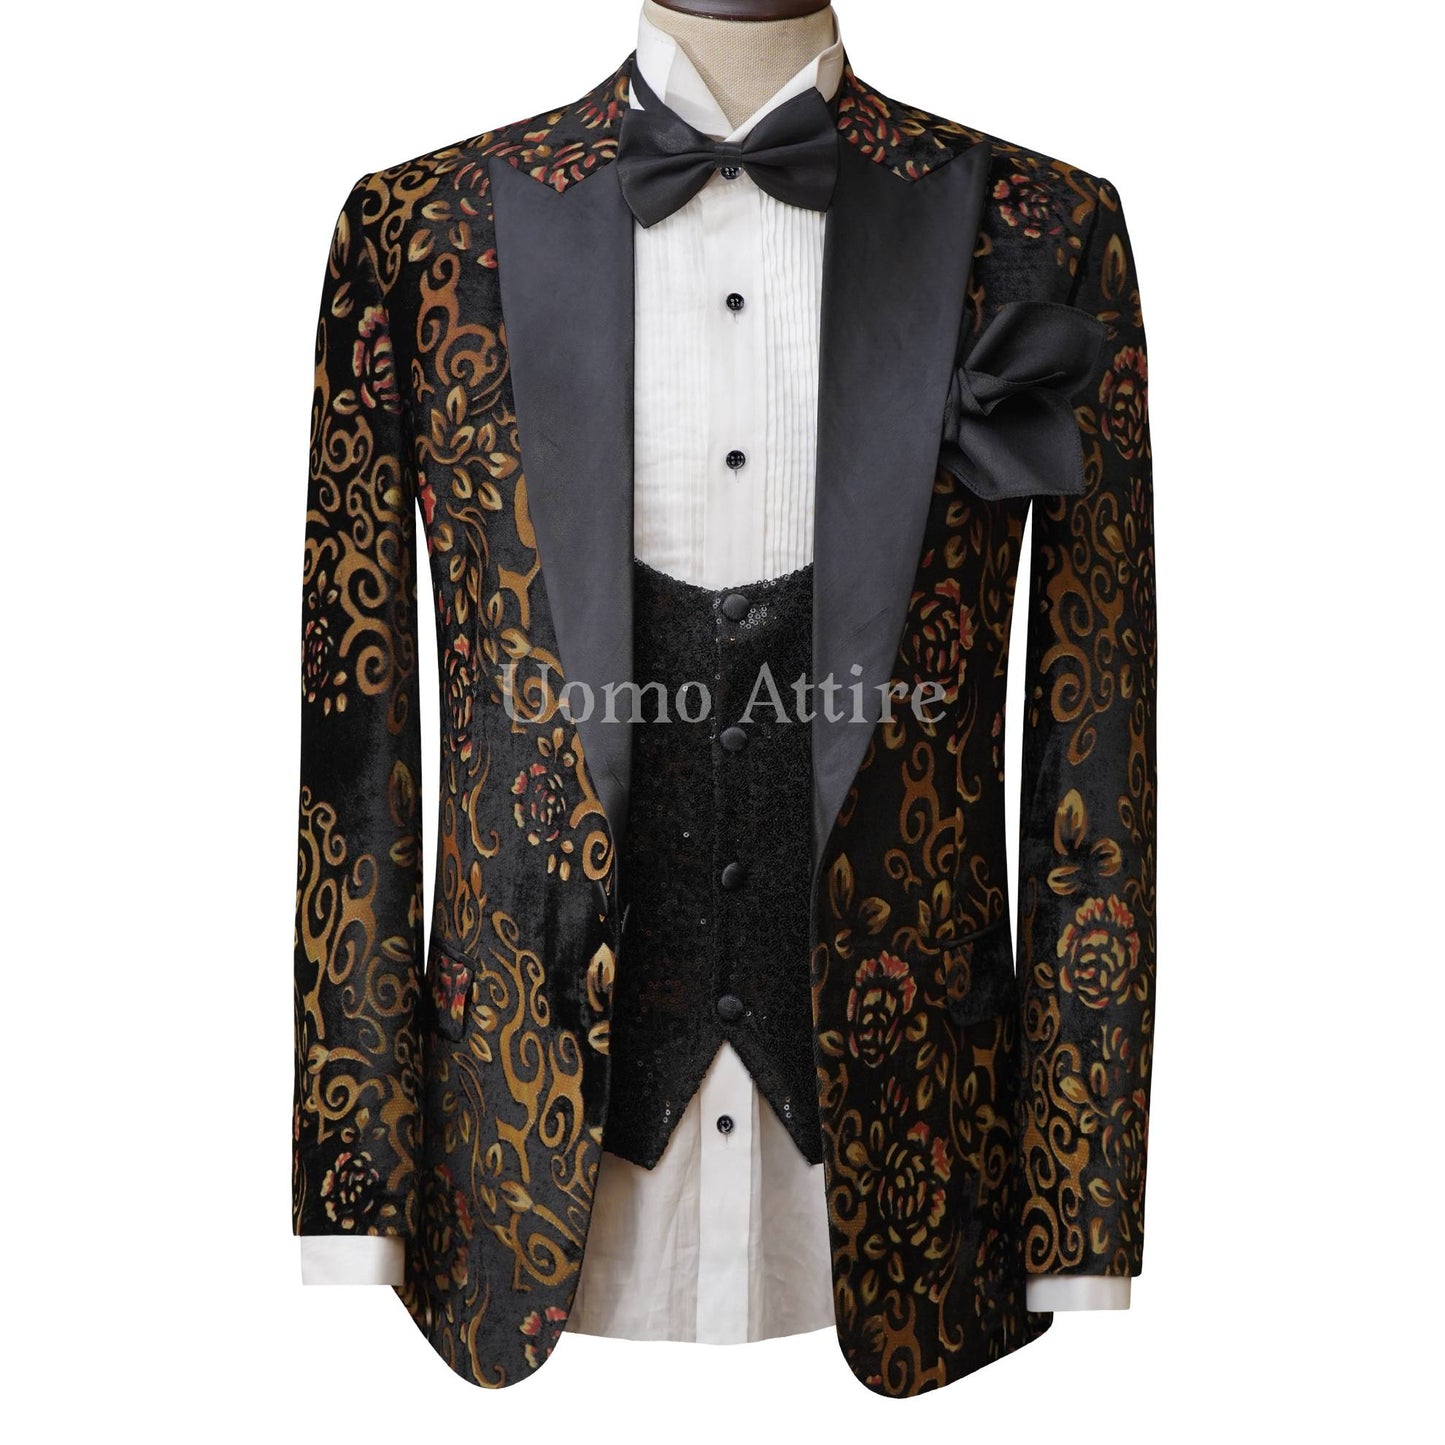 Self-Designed Stylish Tuxedo 3 Piece Suit for Men | Tuxedo Suit